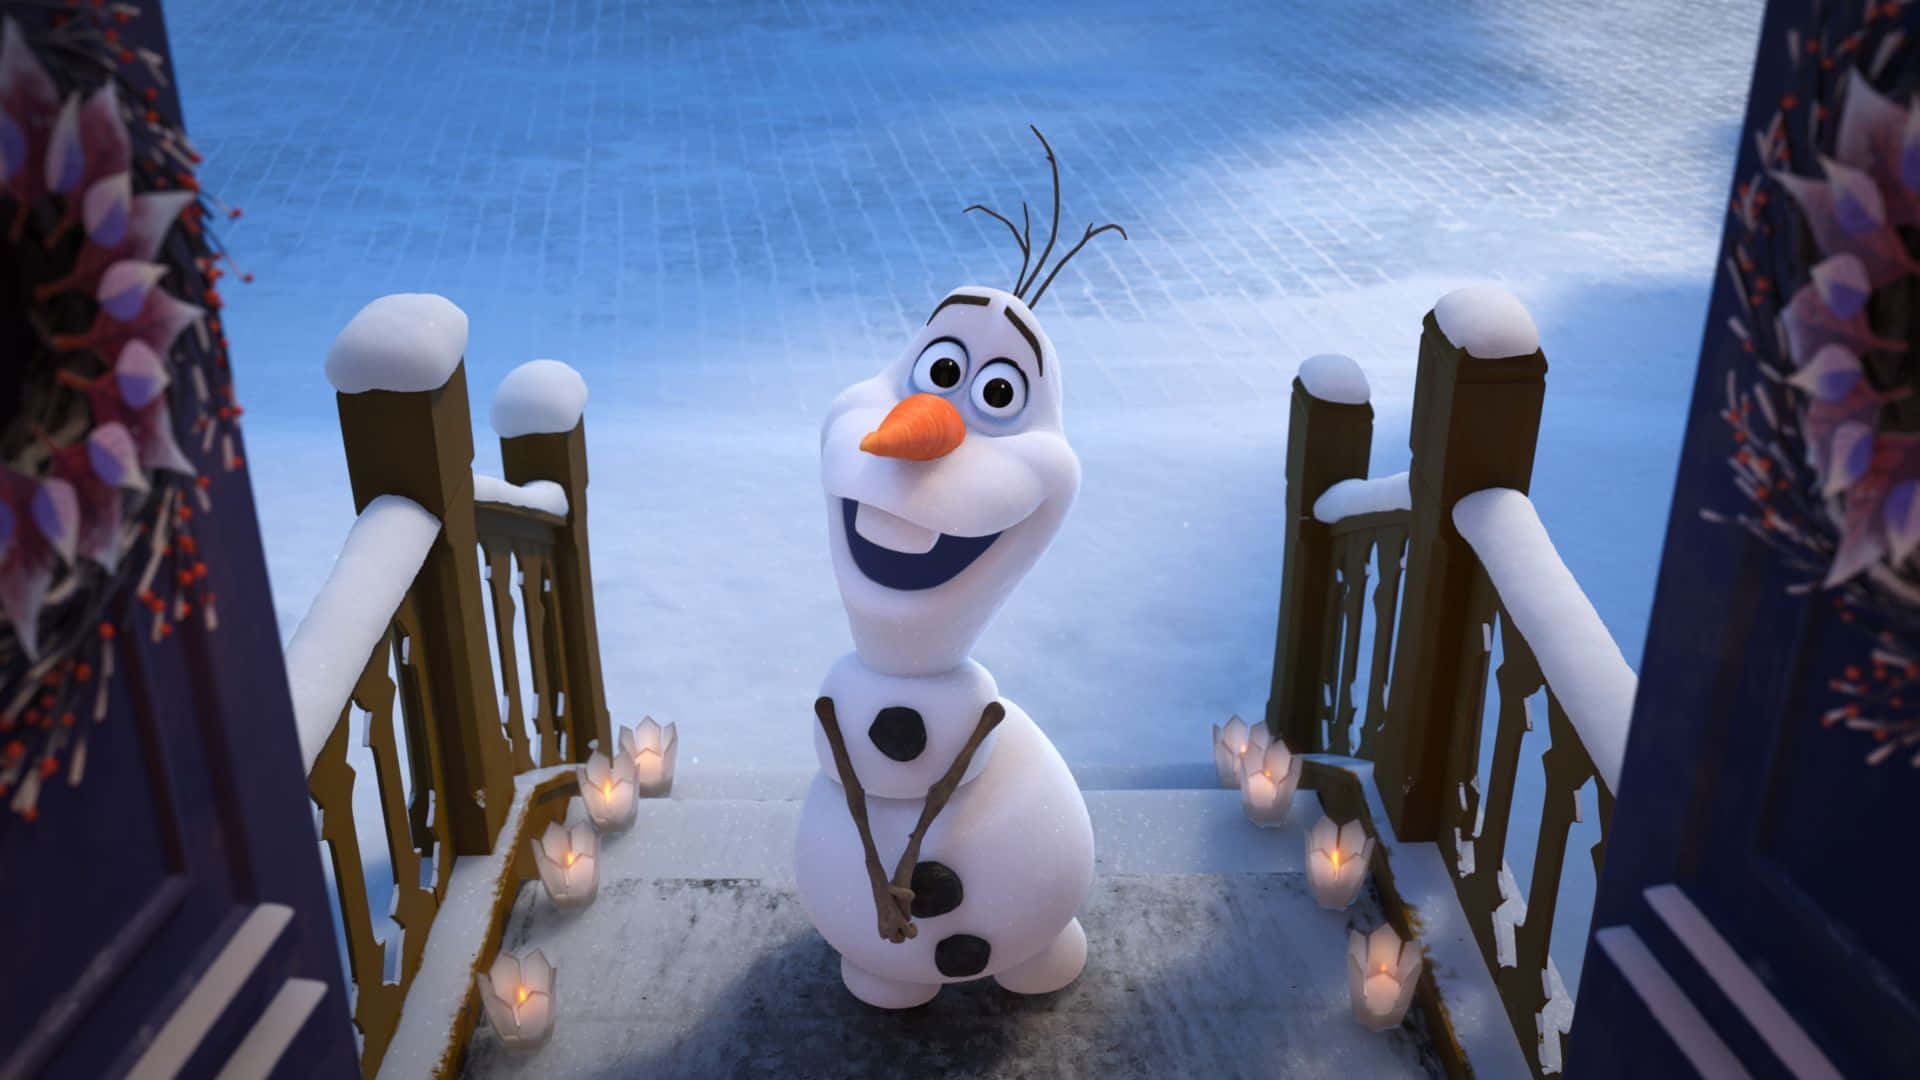 Image  Snowman standing in a snow-filled winter wonderland